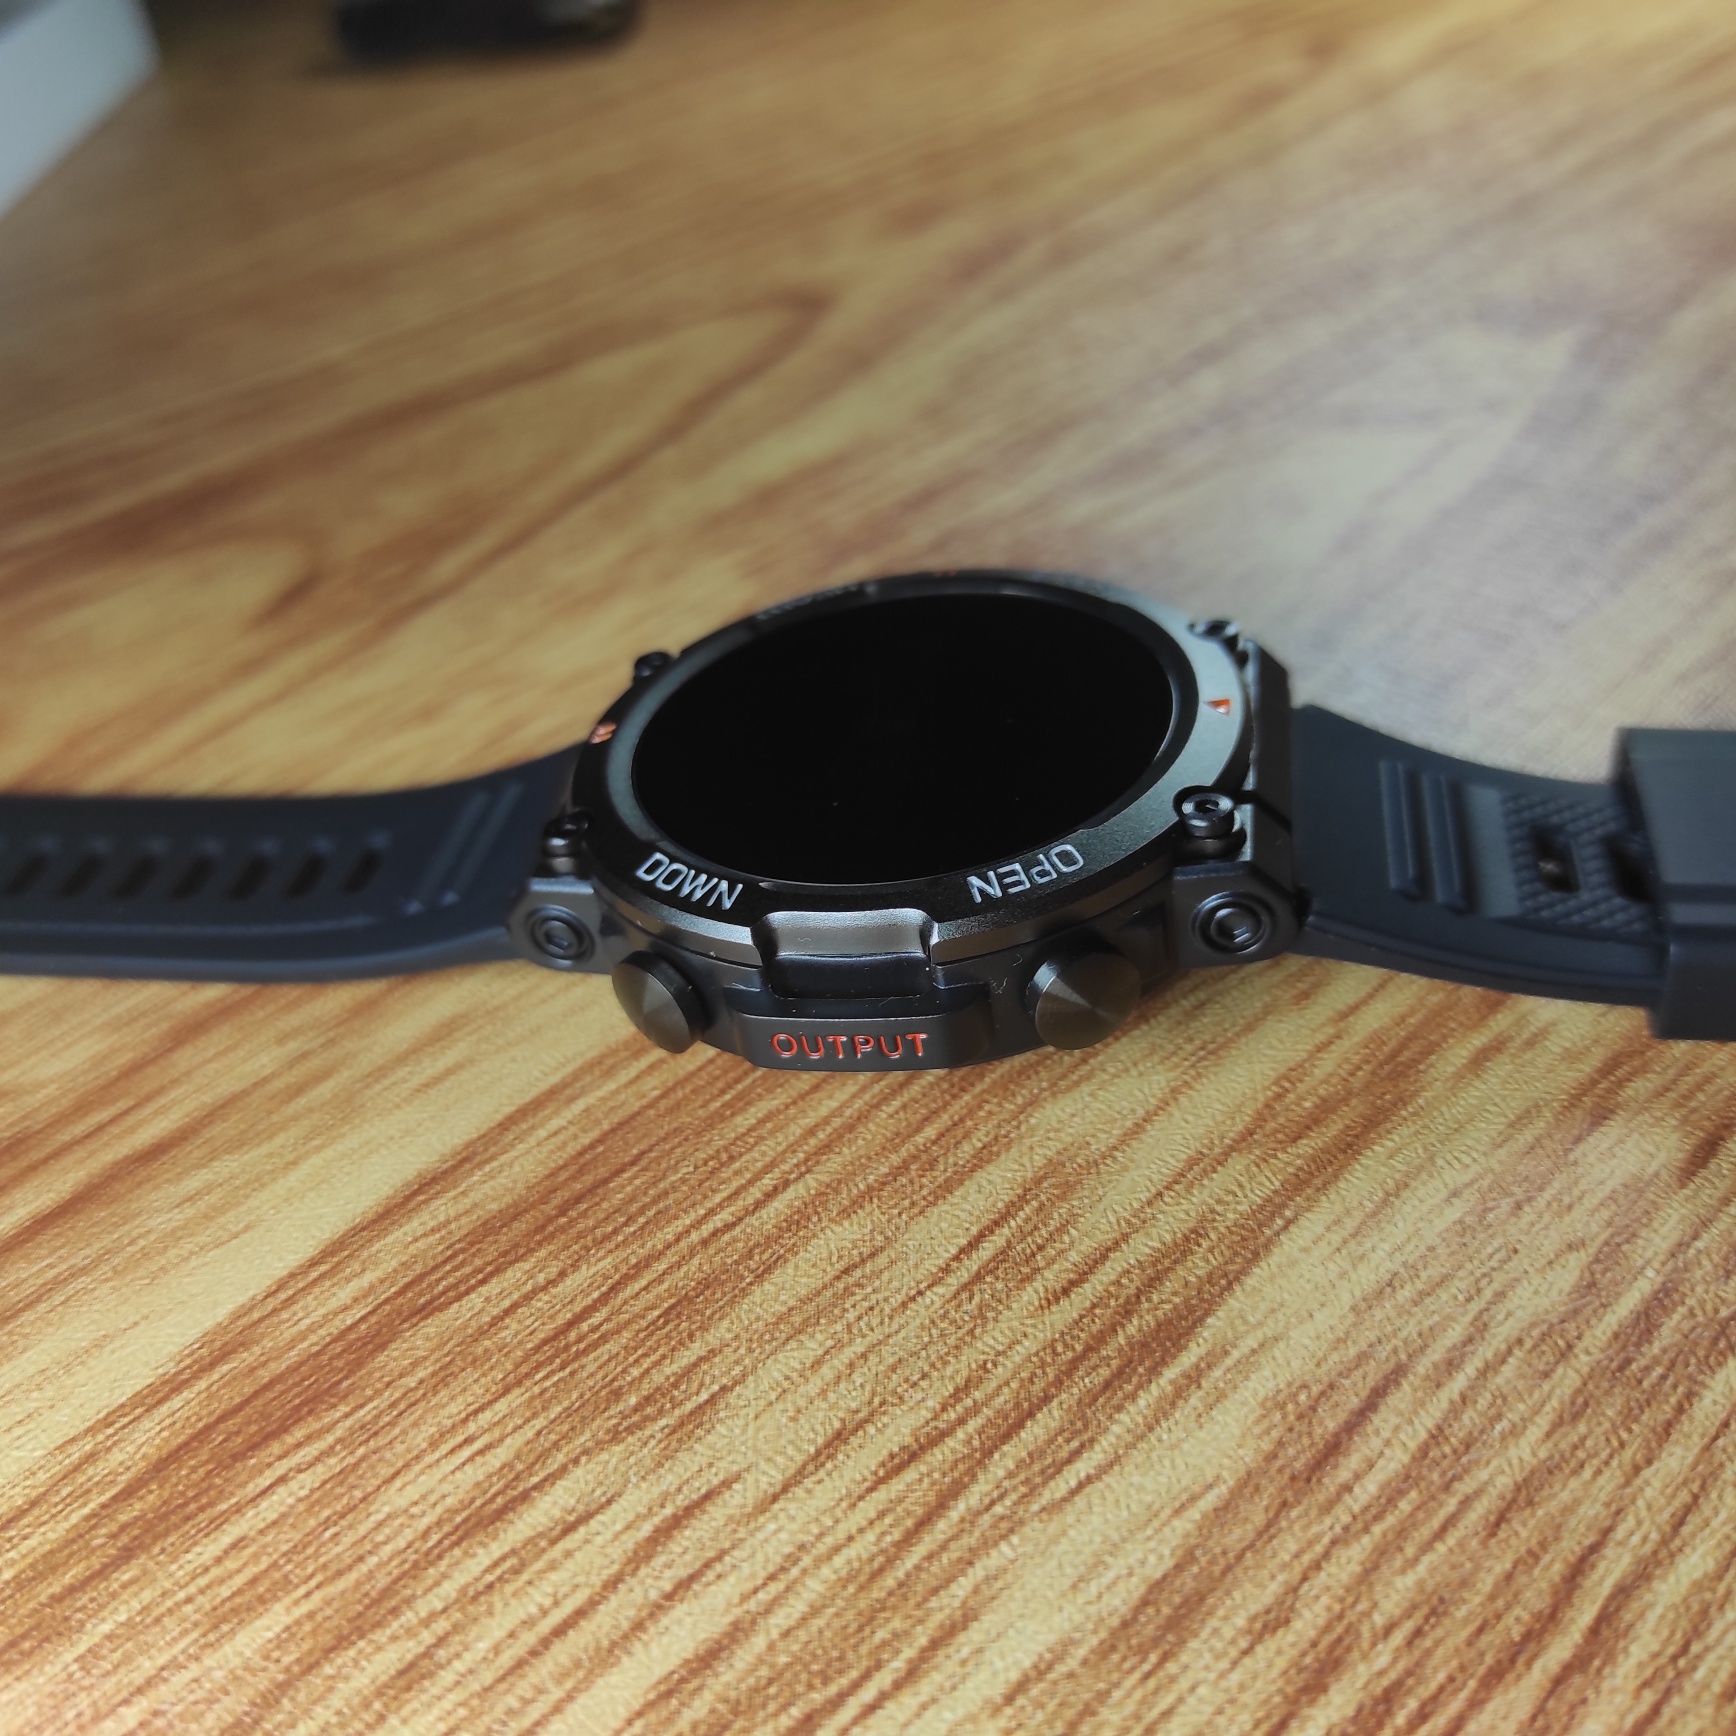 Оригінал! Смарт годинник K56 Pro Melanda Sport Smart Watch